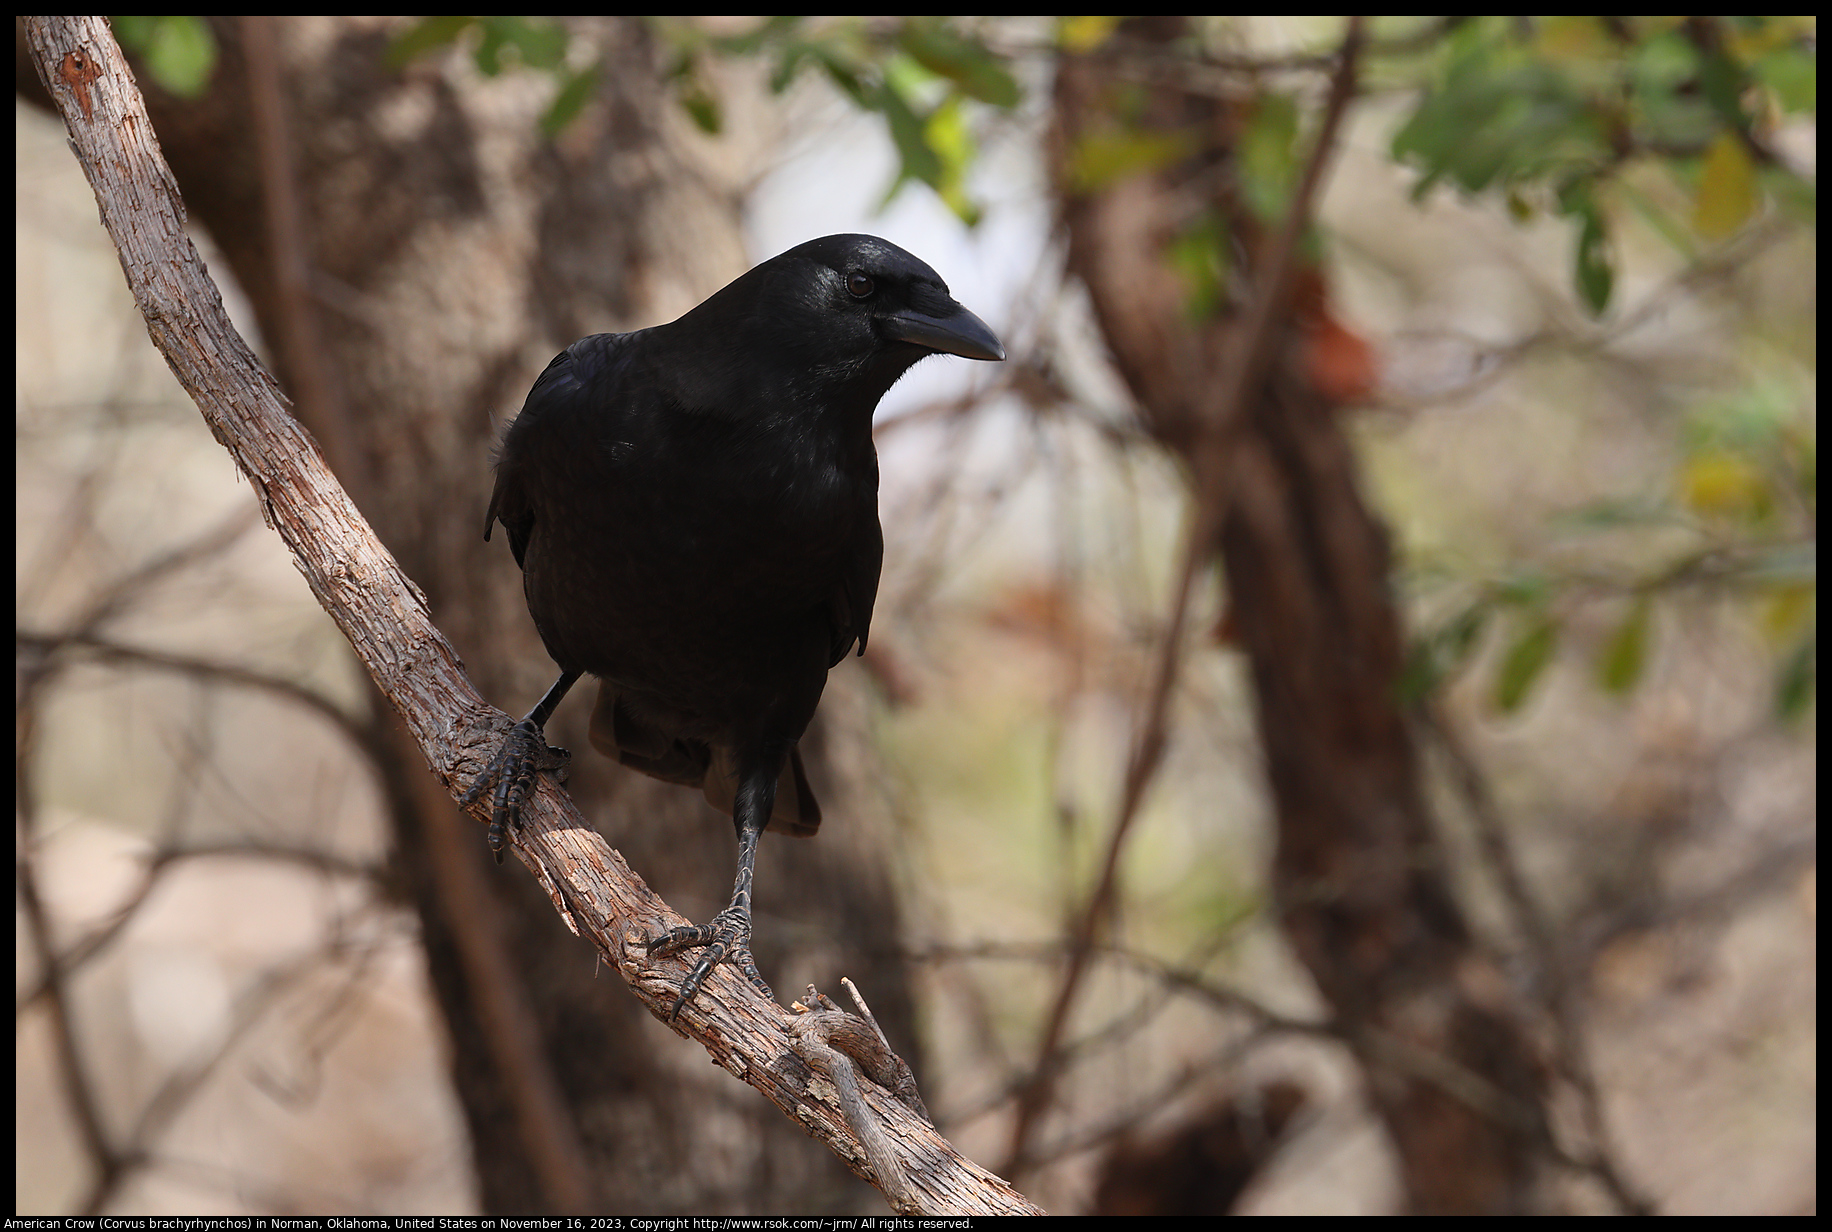 American Crow (Corvus brachyrhynchos) in Norman, Oklahoma, United States, on November 16, 2023